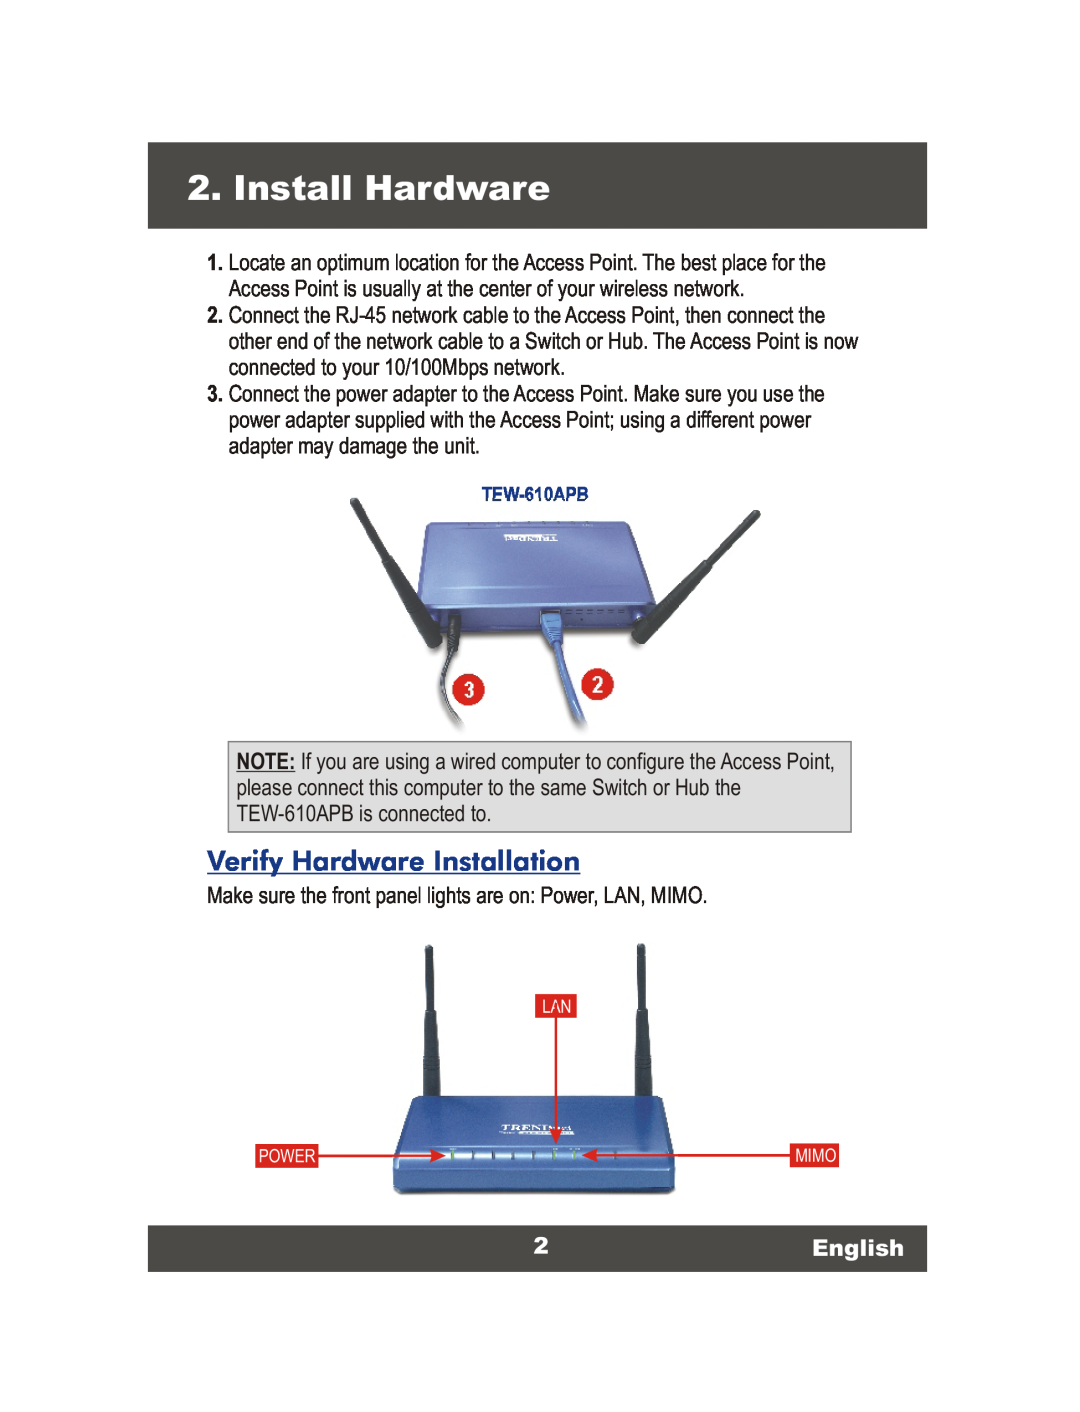 TRENDnet Wireless Access Point, TEW-610APB manual Install Hardware, 2English, Verify Hardware Installation 